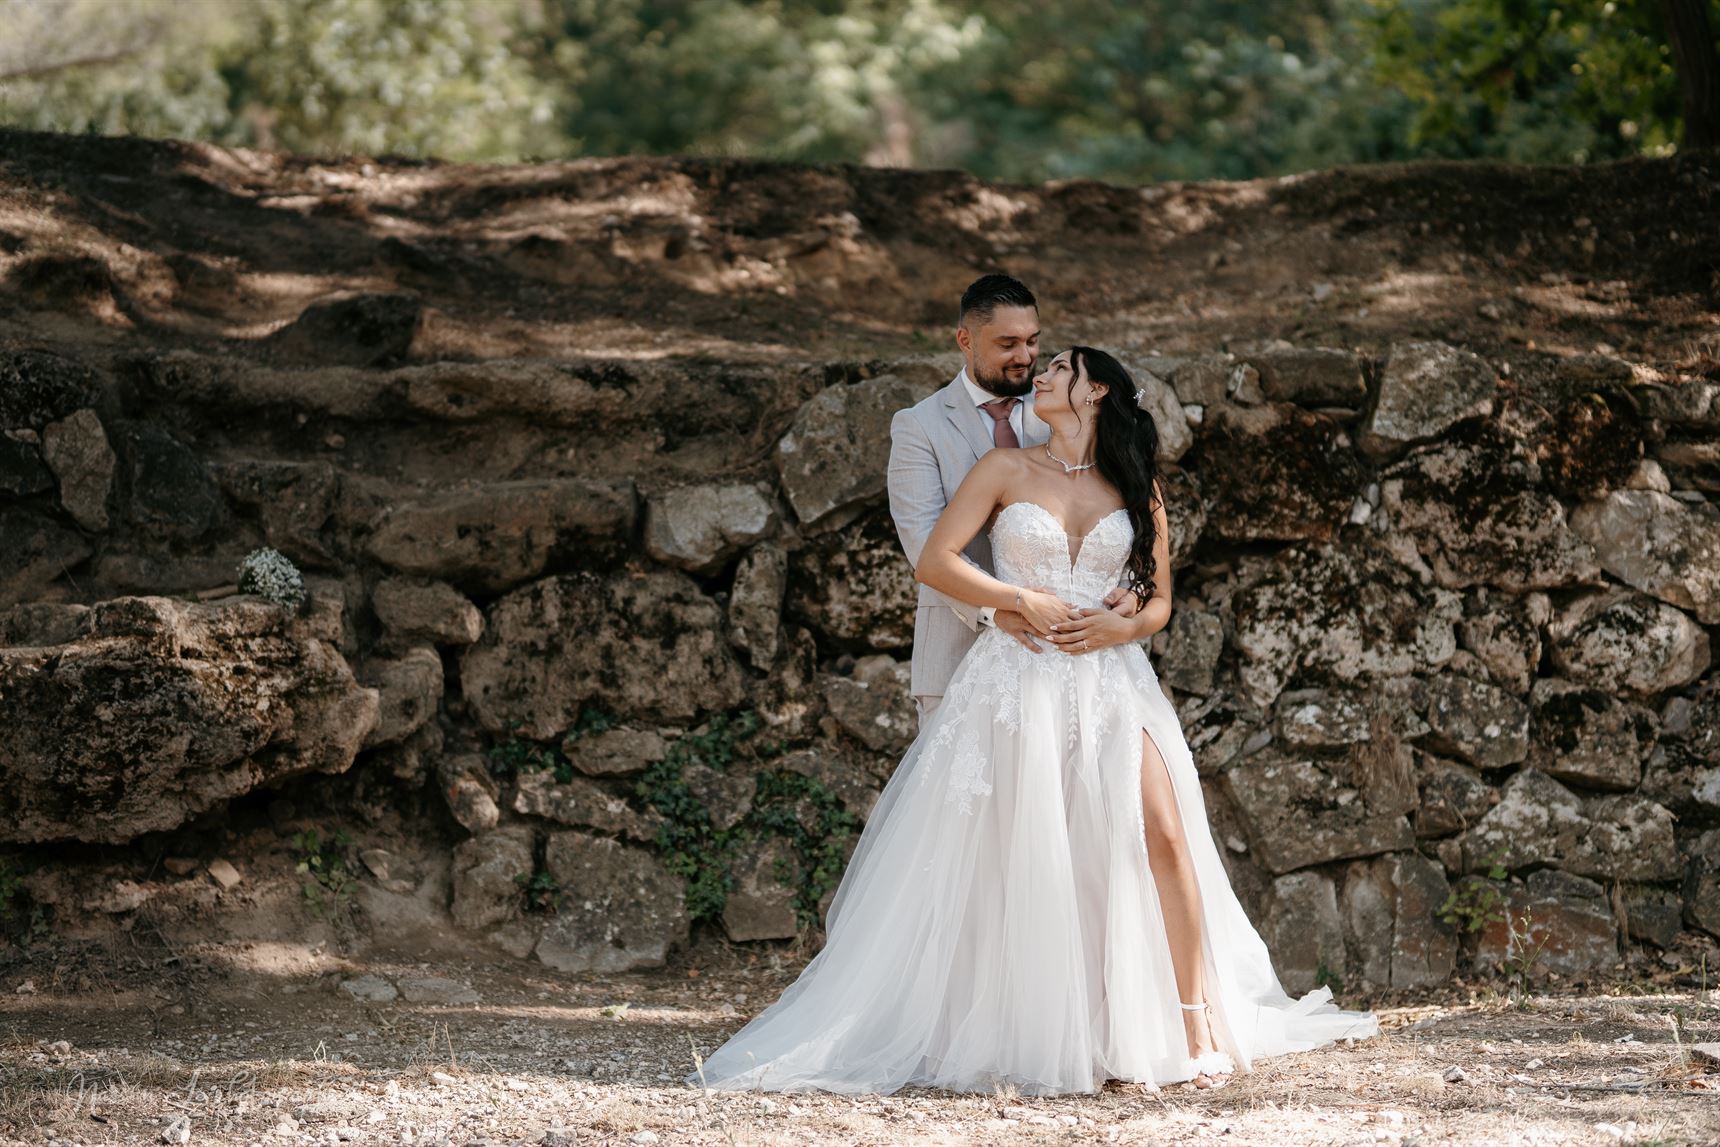 Wedding Photographer Aix en Provence: Capturing Love's Embrace 22